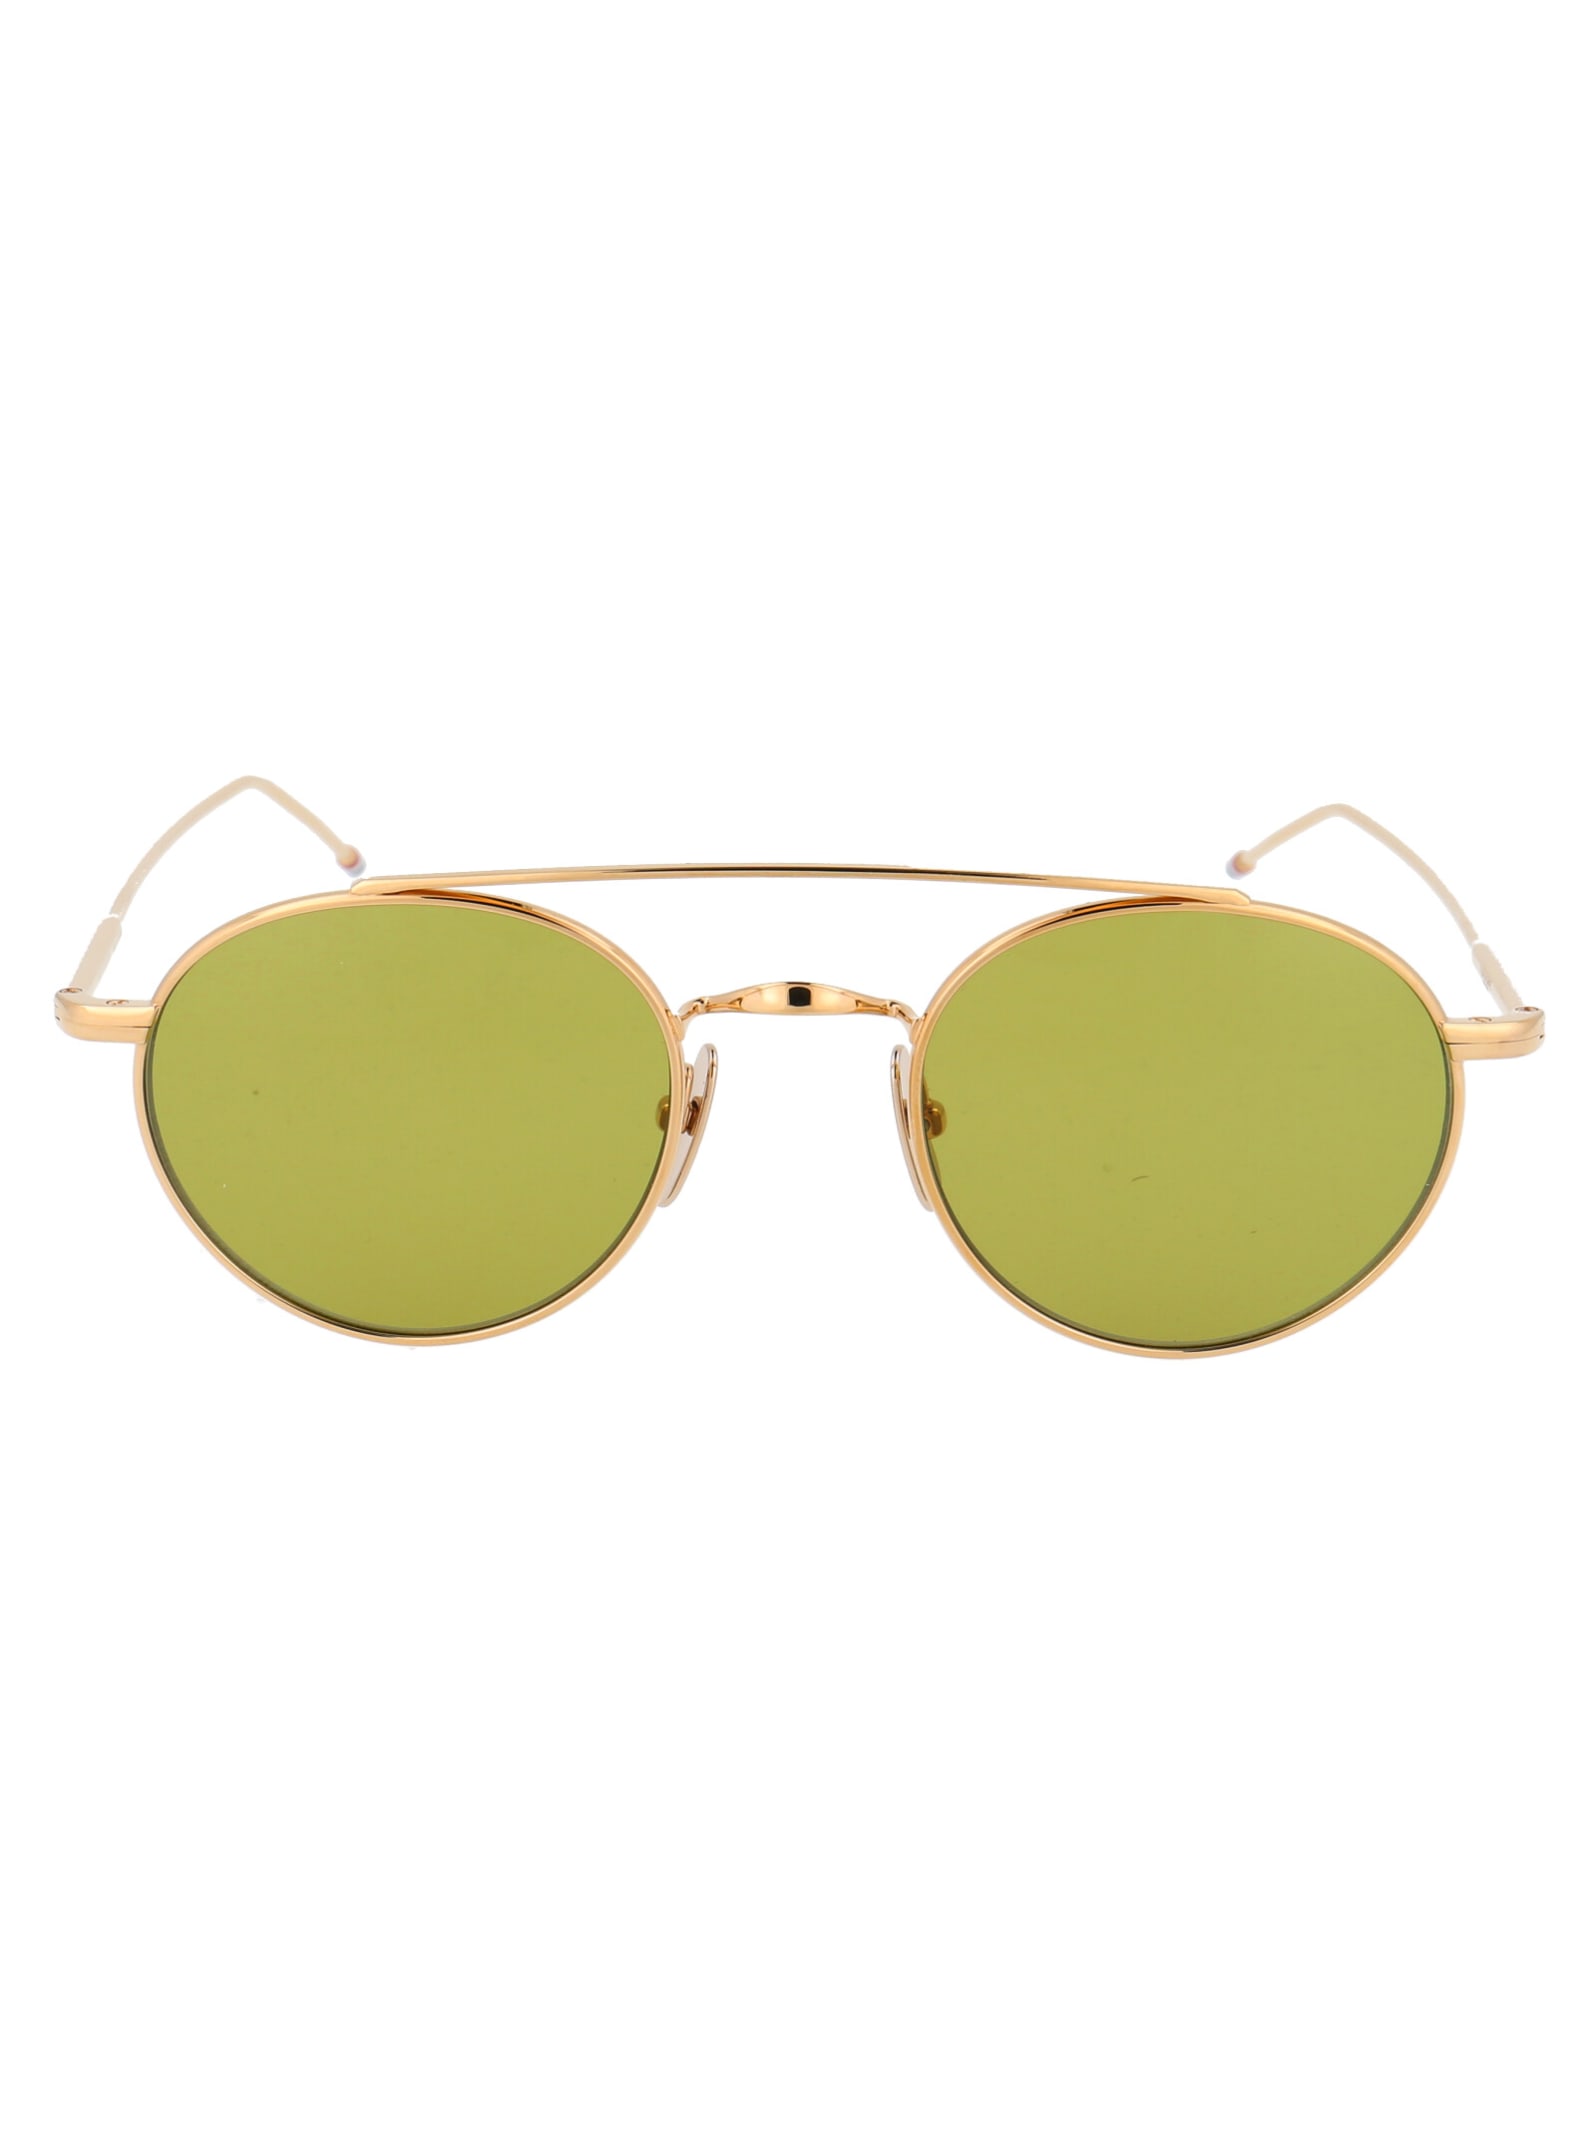 Thom Browne Tb-101 Sunglasses